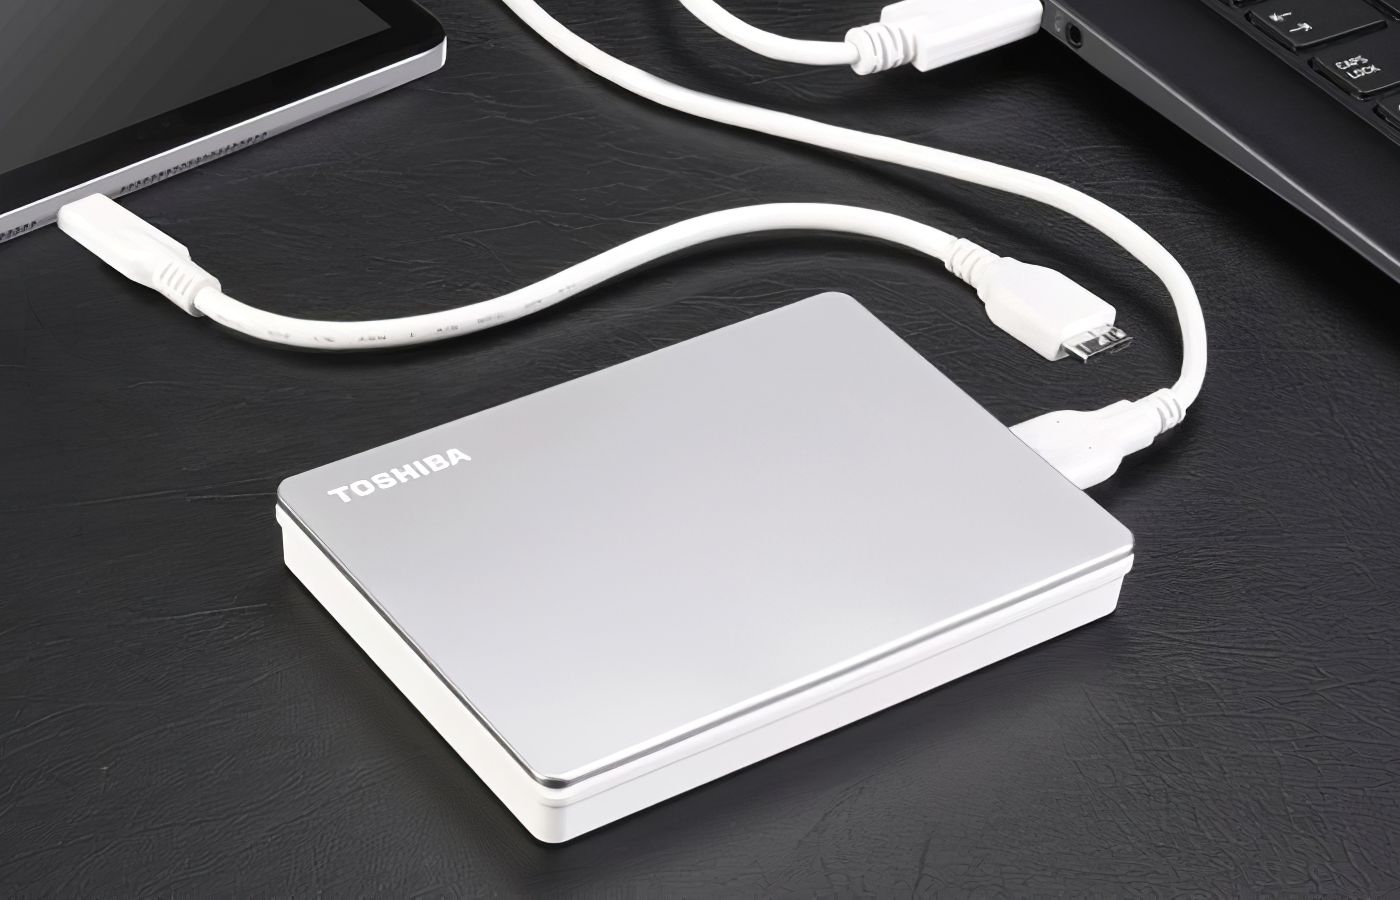 Toshiba Disque dur externe 1To CANVIO BASICS USB-C pas cher 